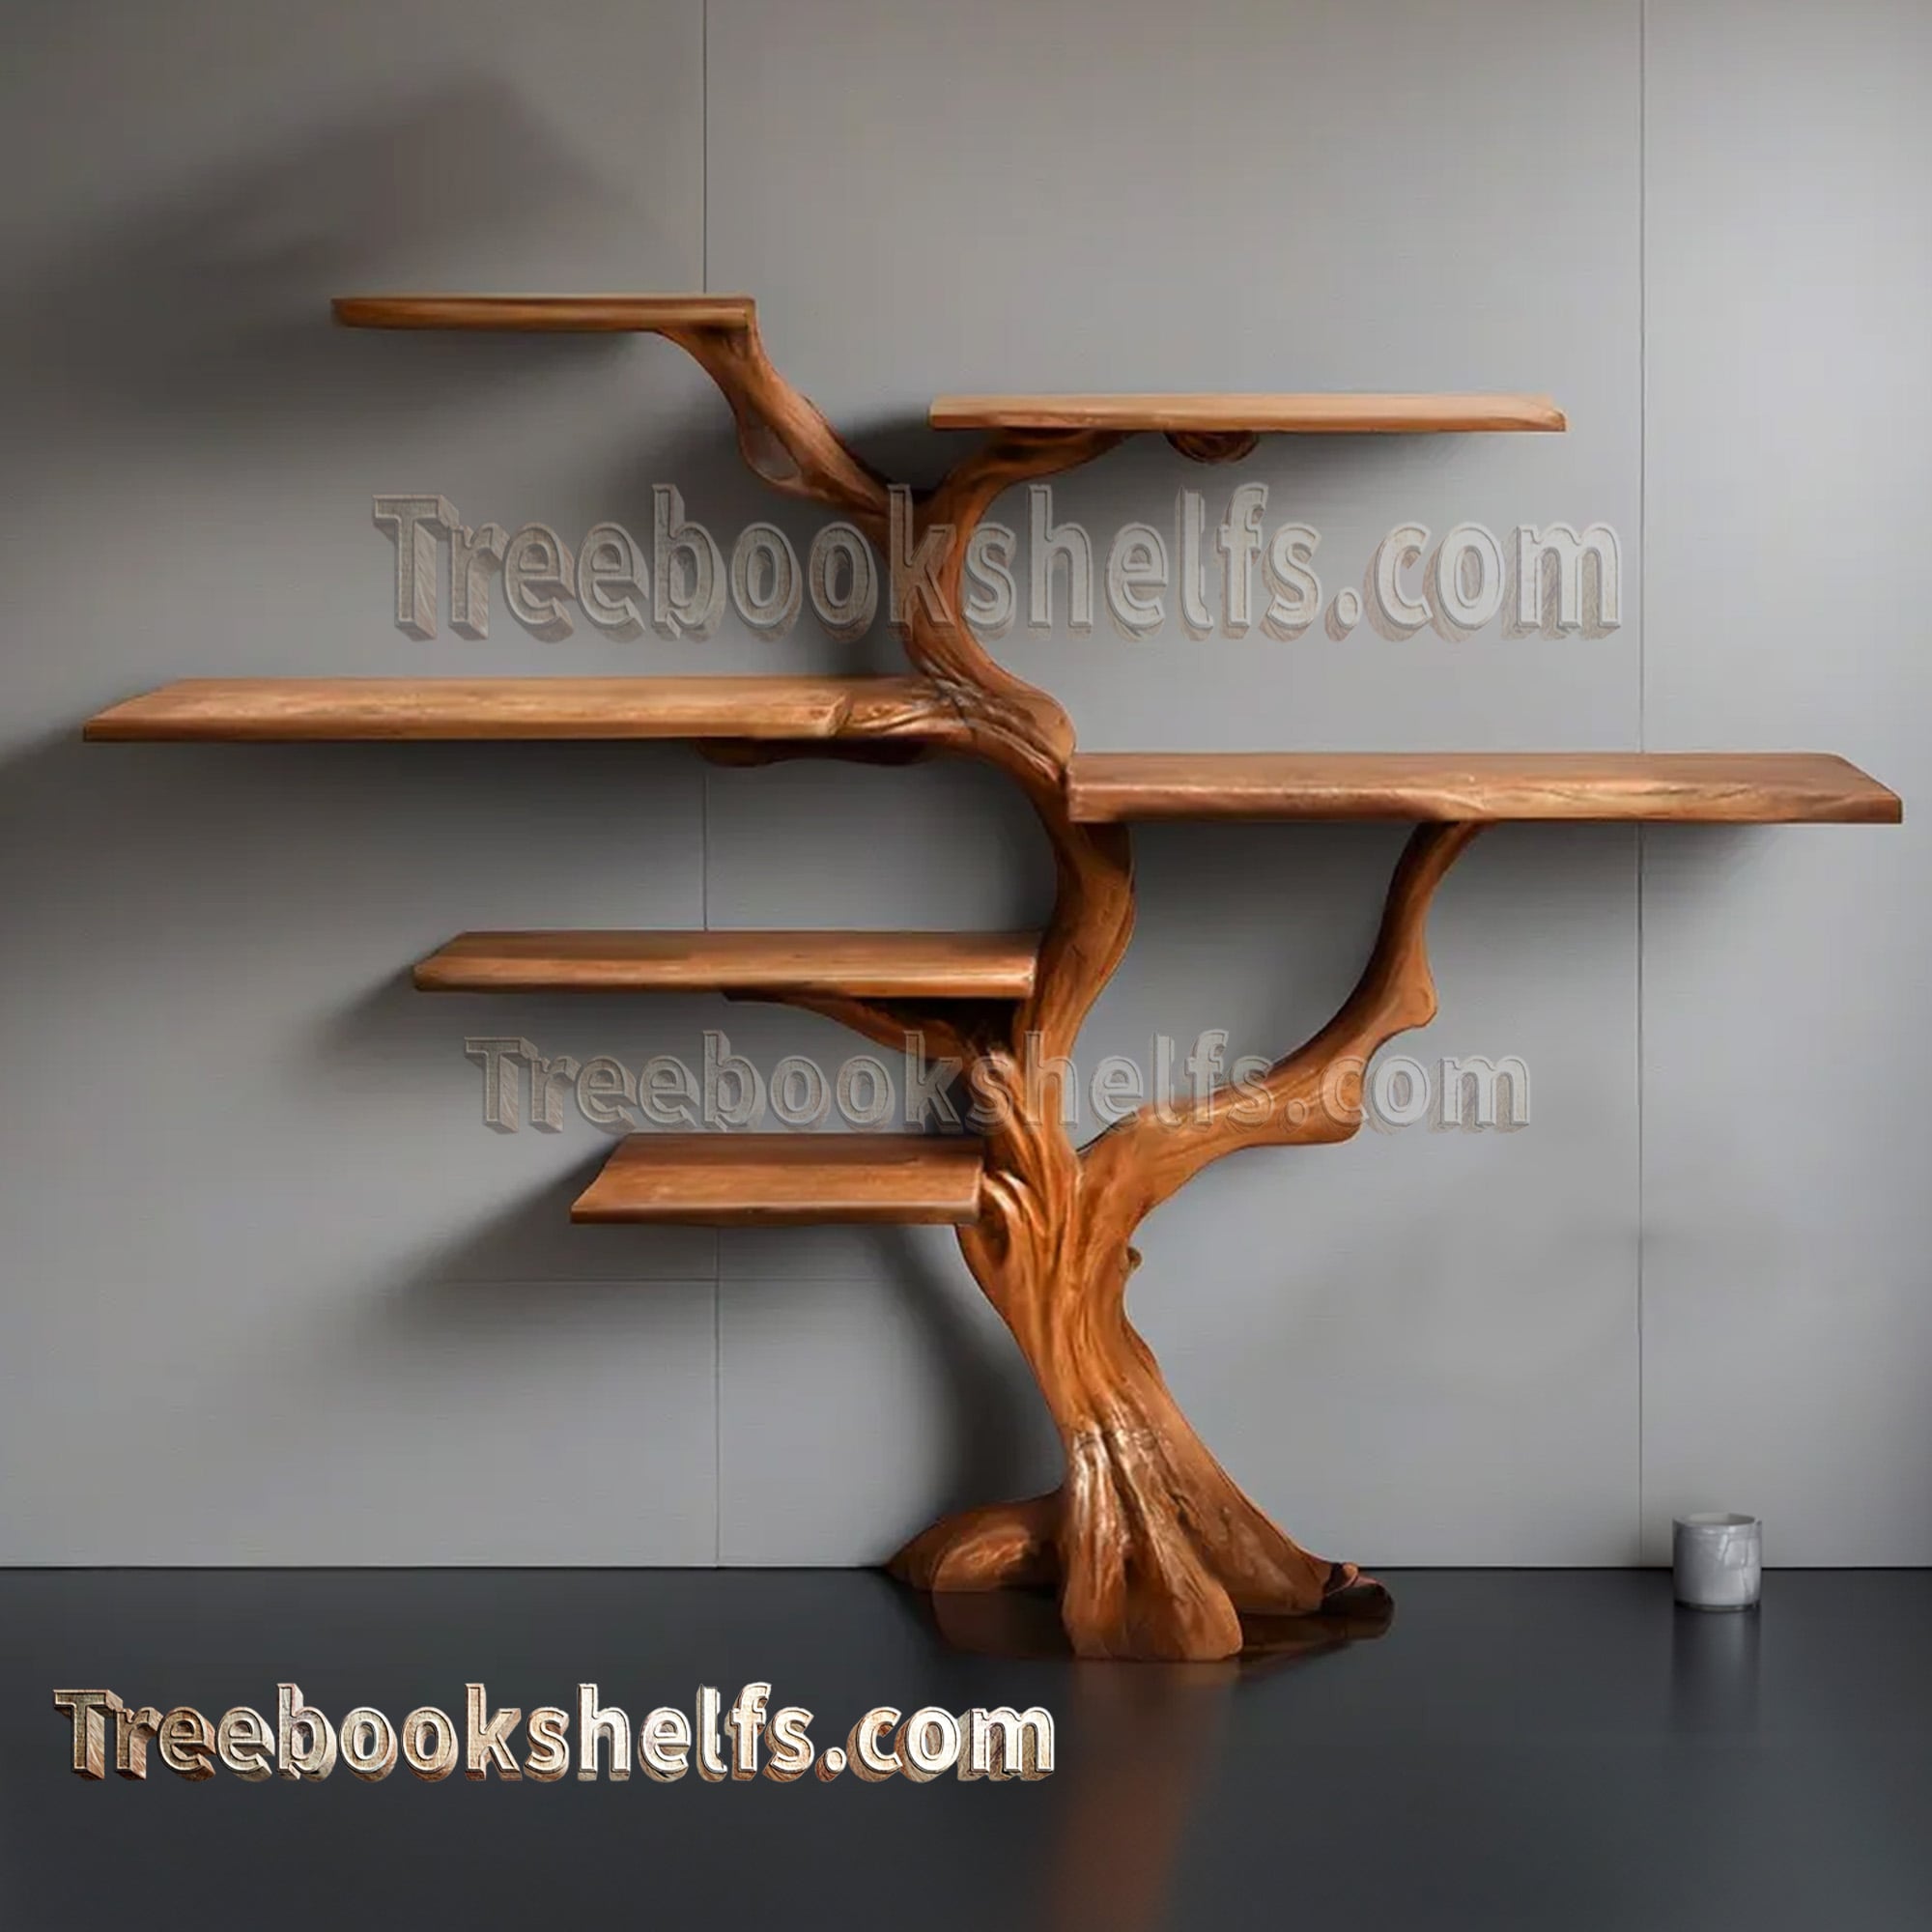 Treebookshelf1 min